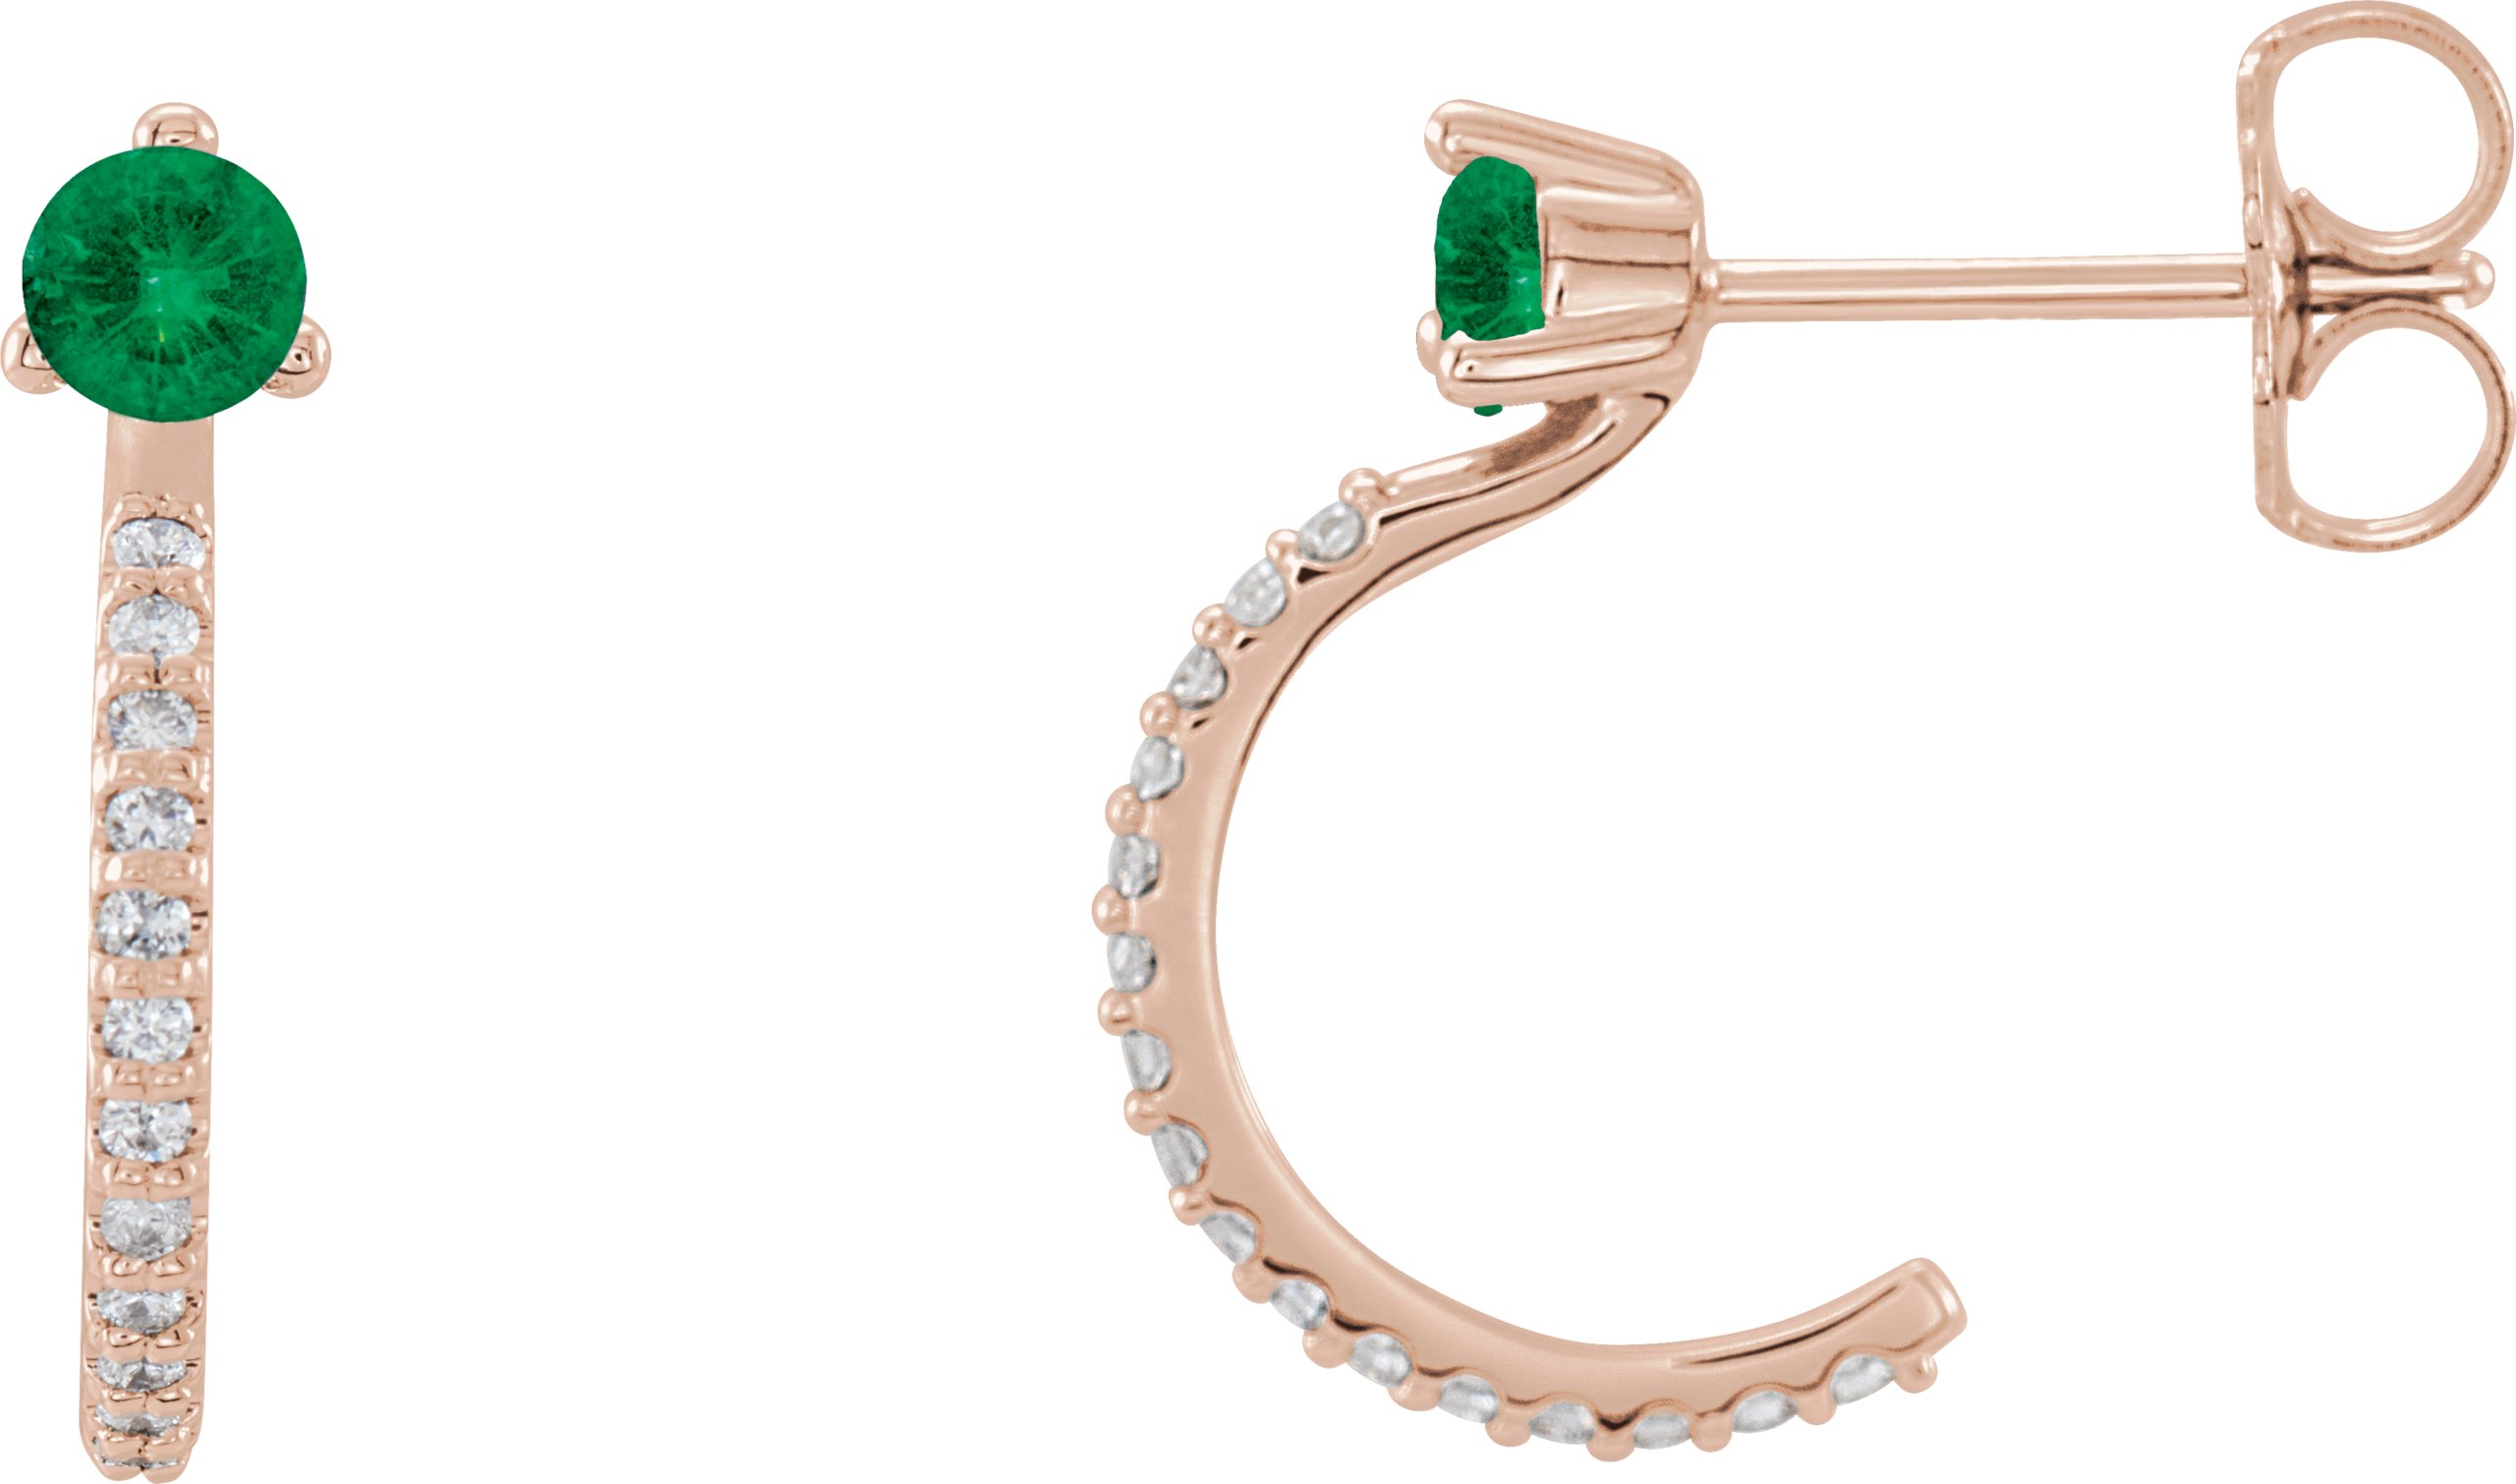 14K Rose Chatham® Lab-Created Emerald & 1/6 CTW Diamond Hoop Earrings